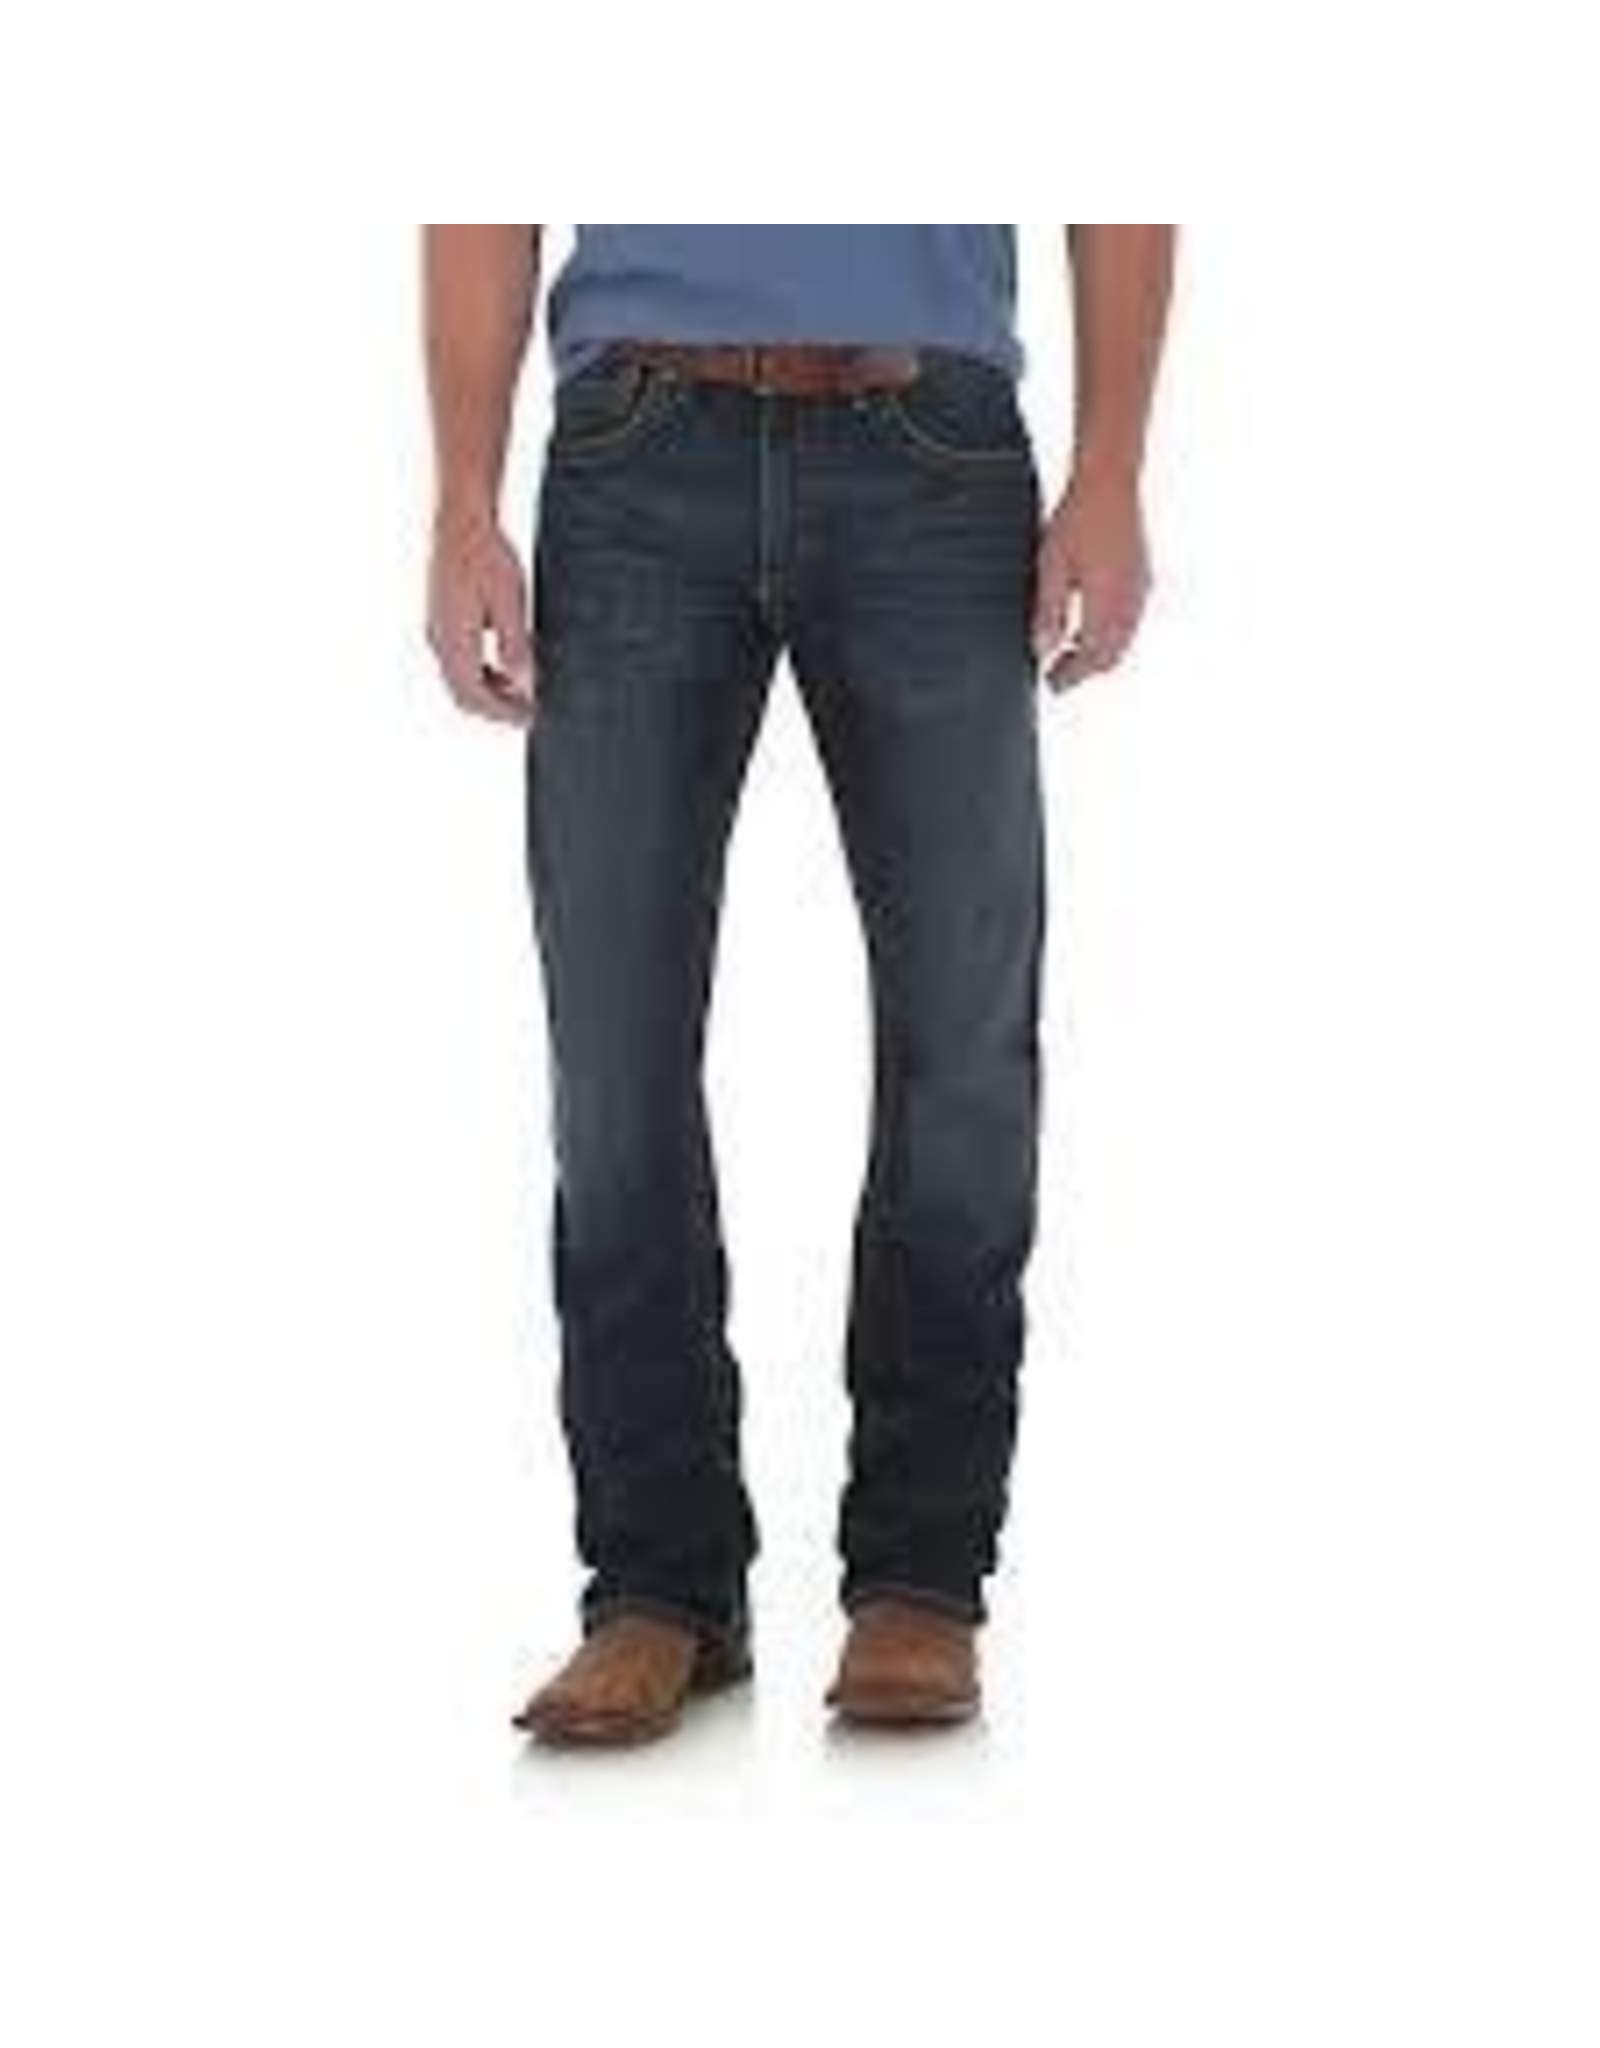 Jeans-Men WRANGLER 42MWX Vintage Boot Cut 20X